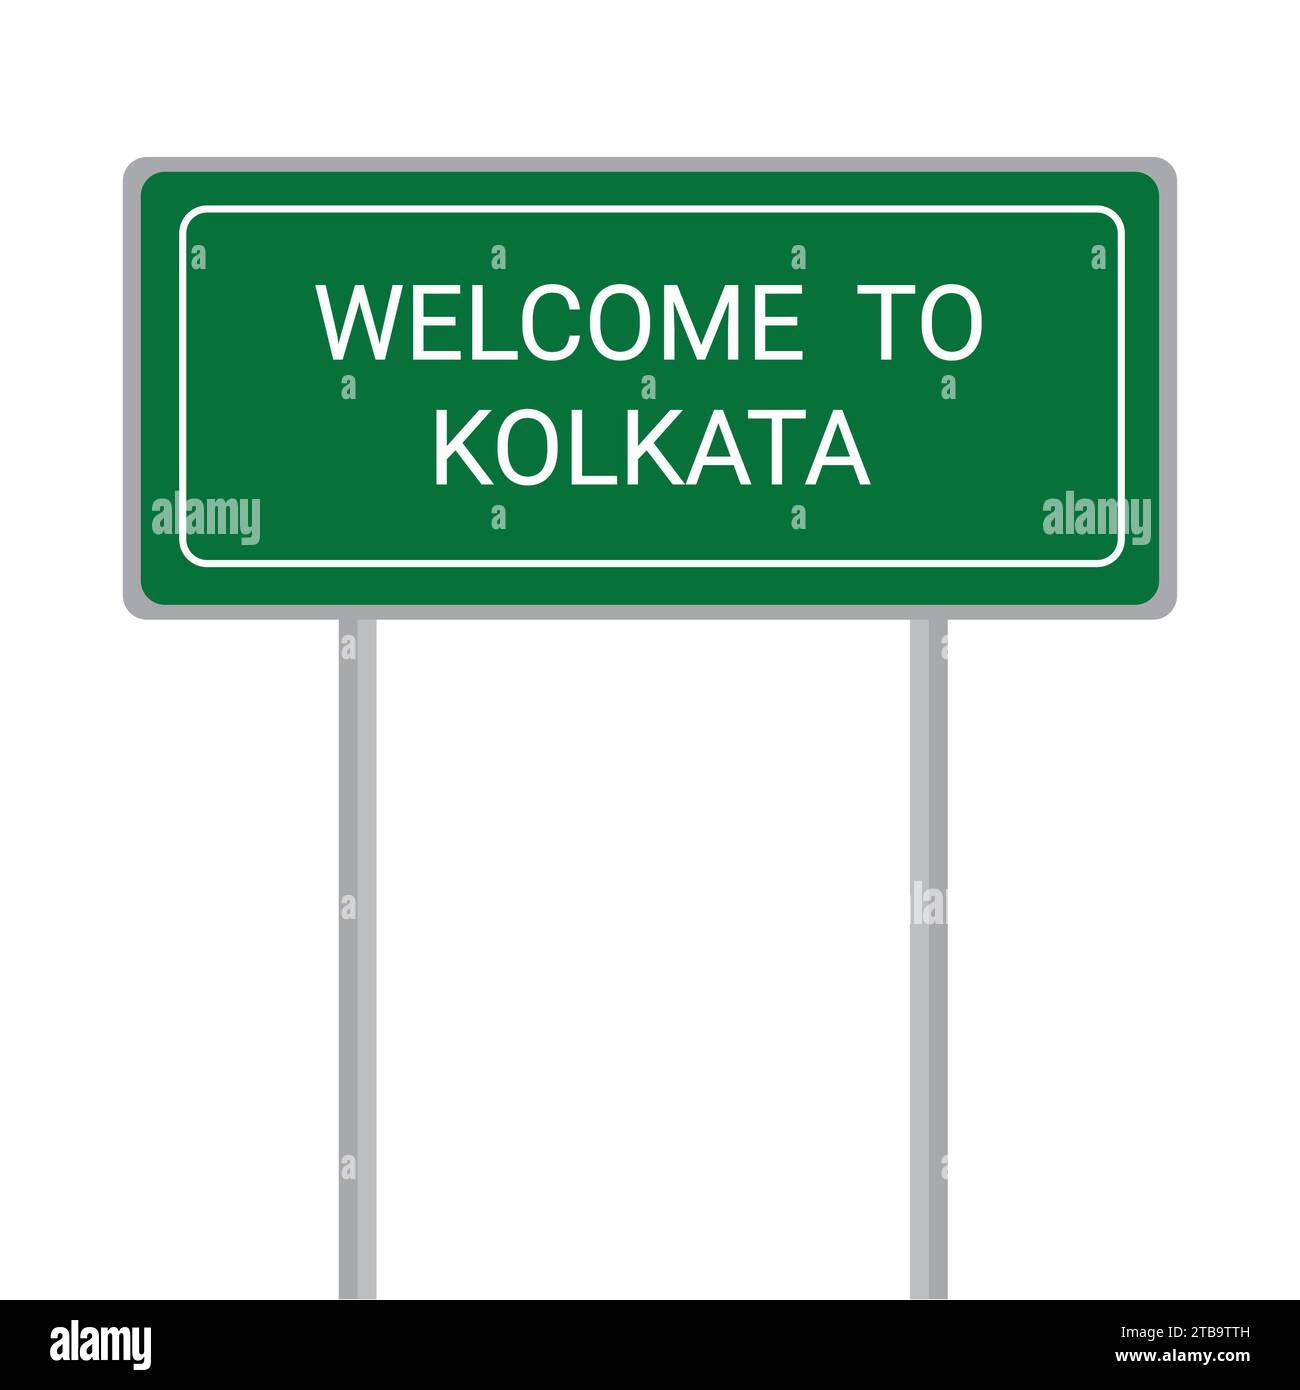 Welcome to Kolkata name sign board vector illustration Stock Vector